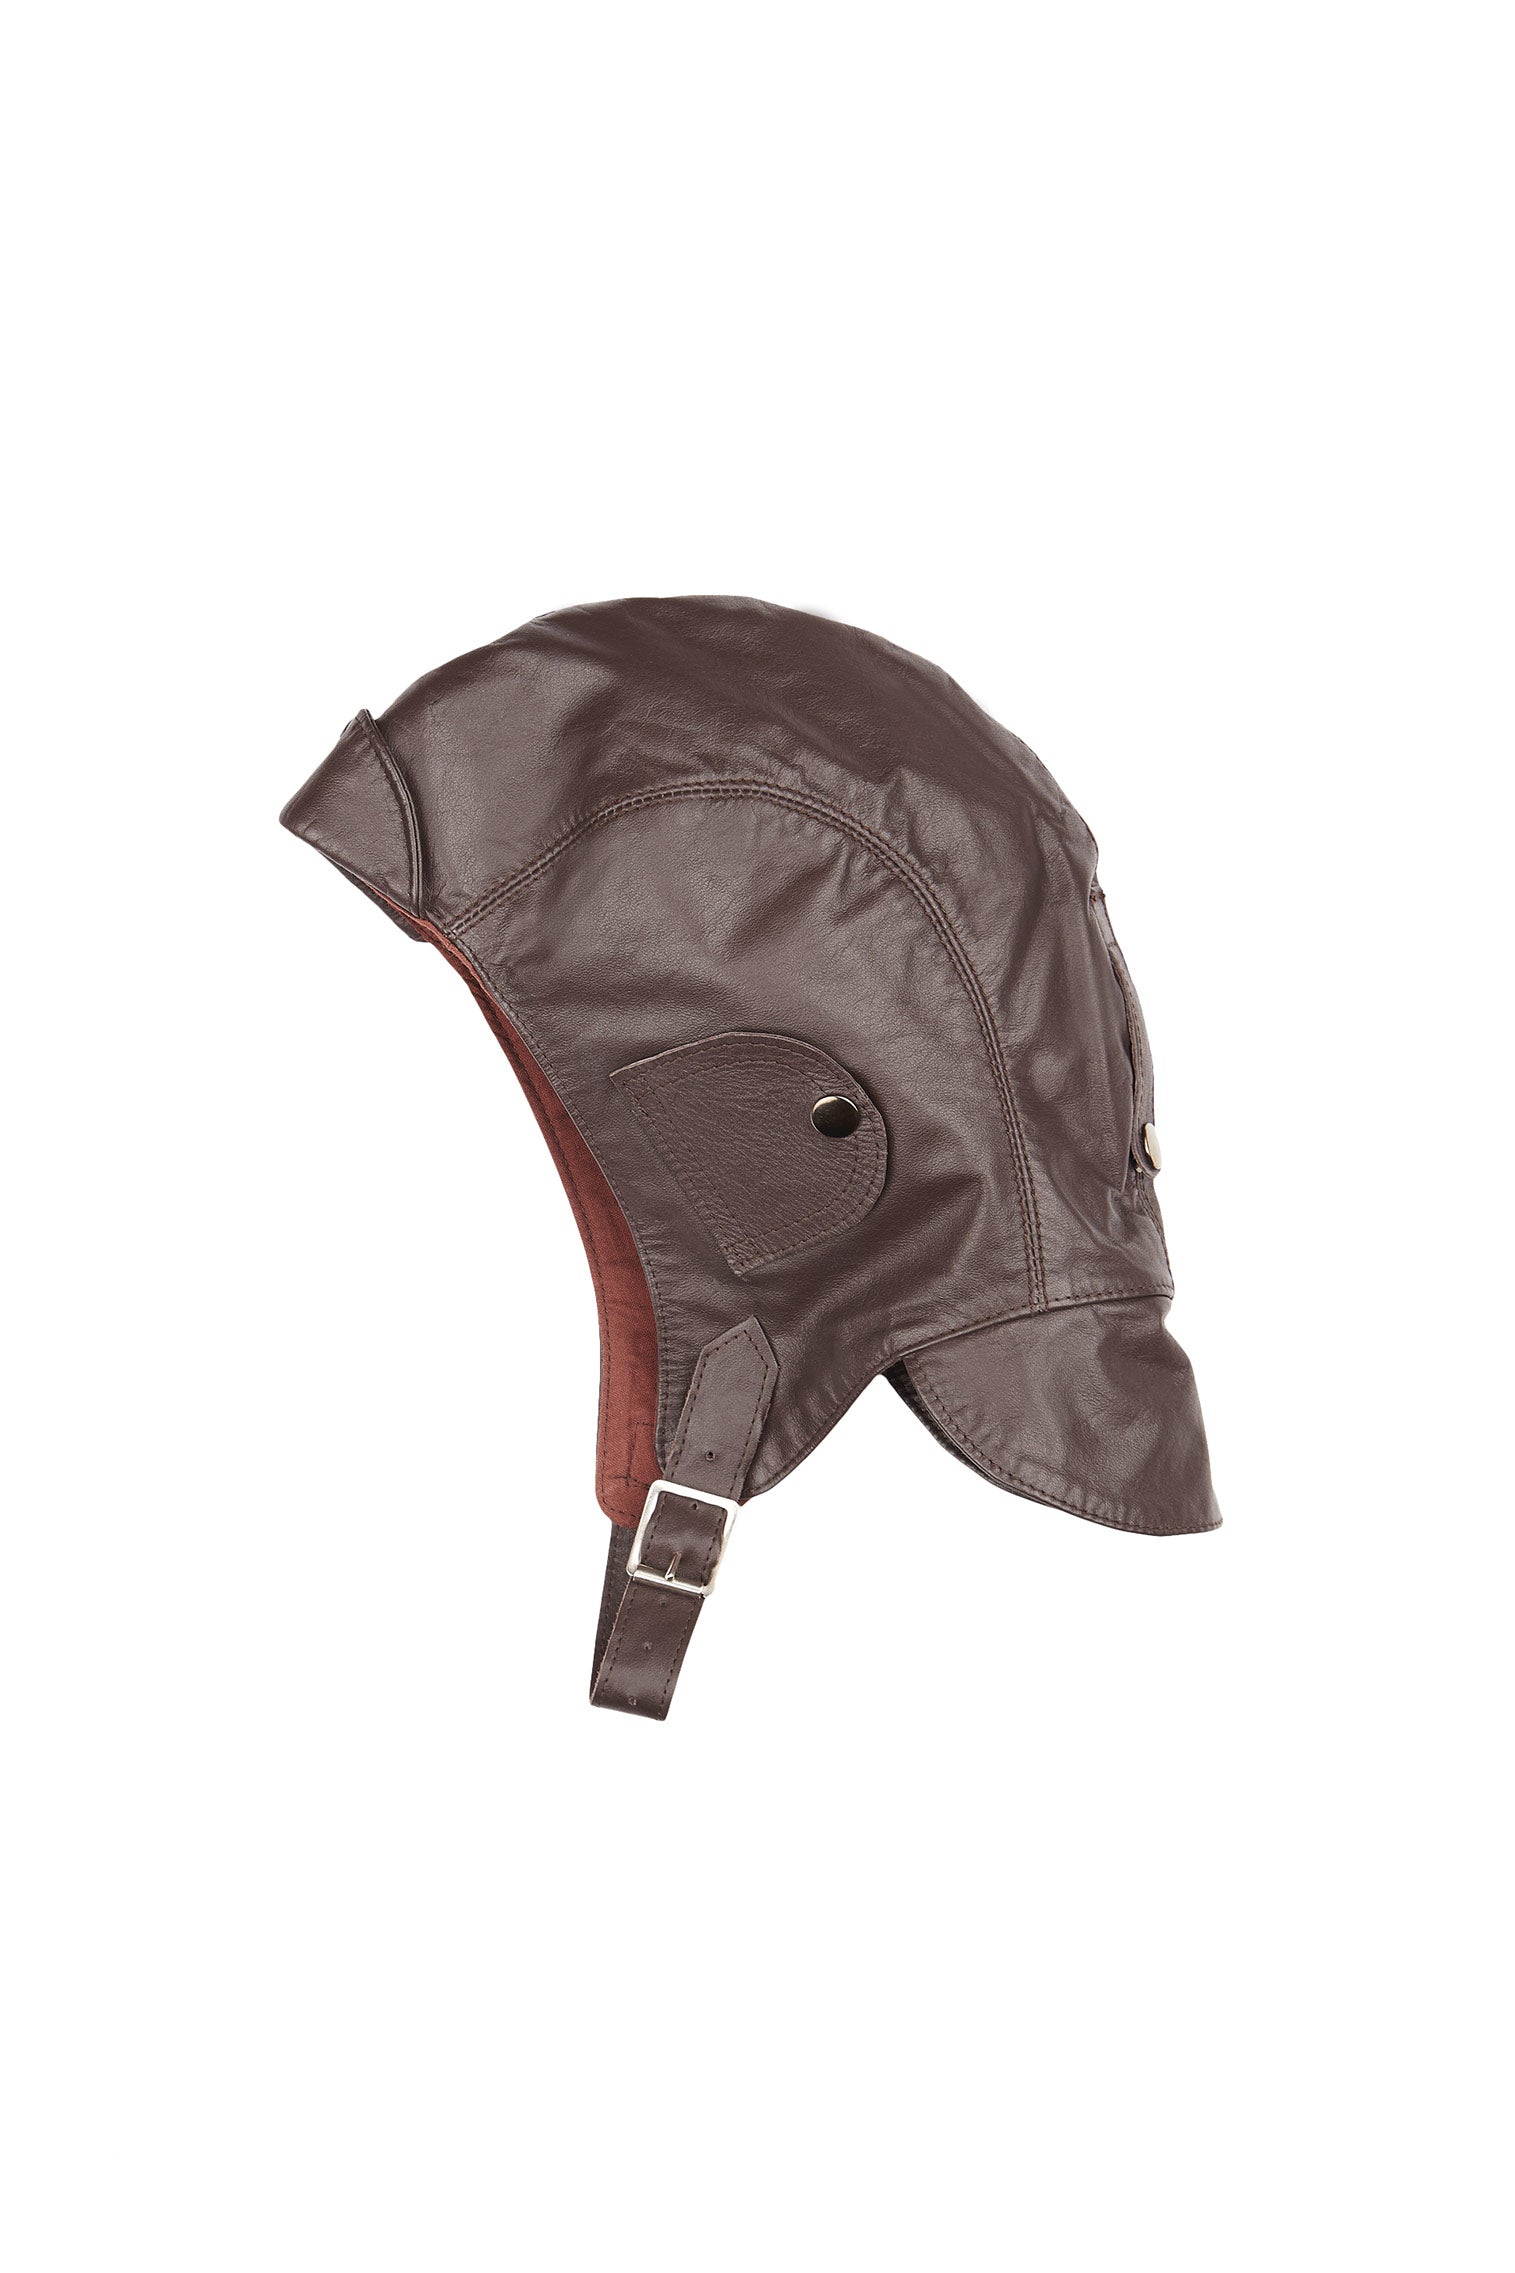 Aviator Helmet - Products - Lock & Co. Hatters London UK